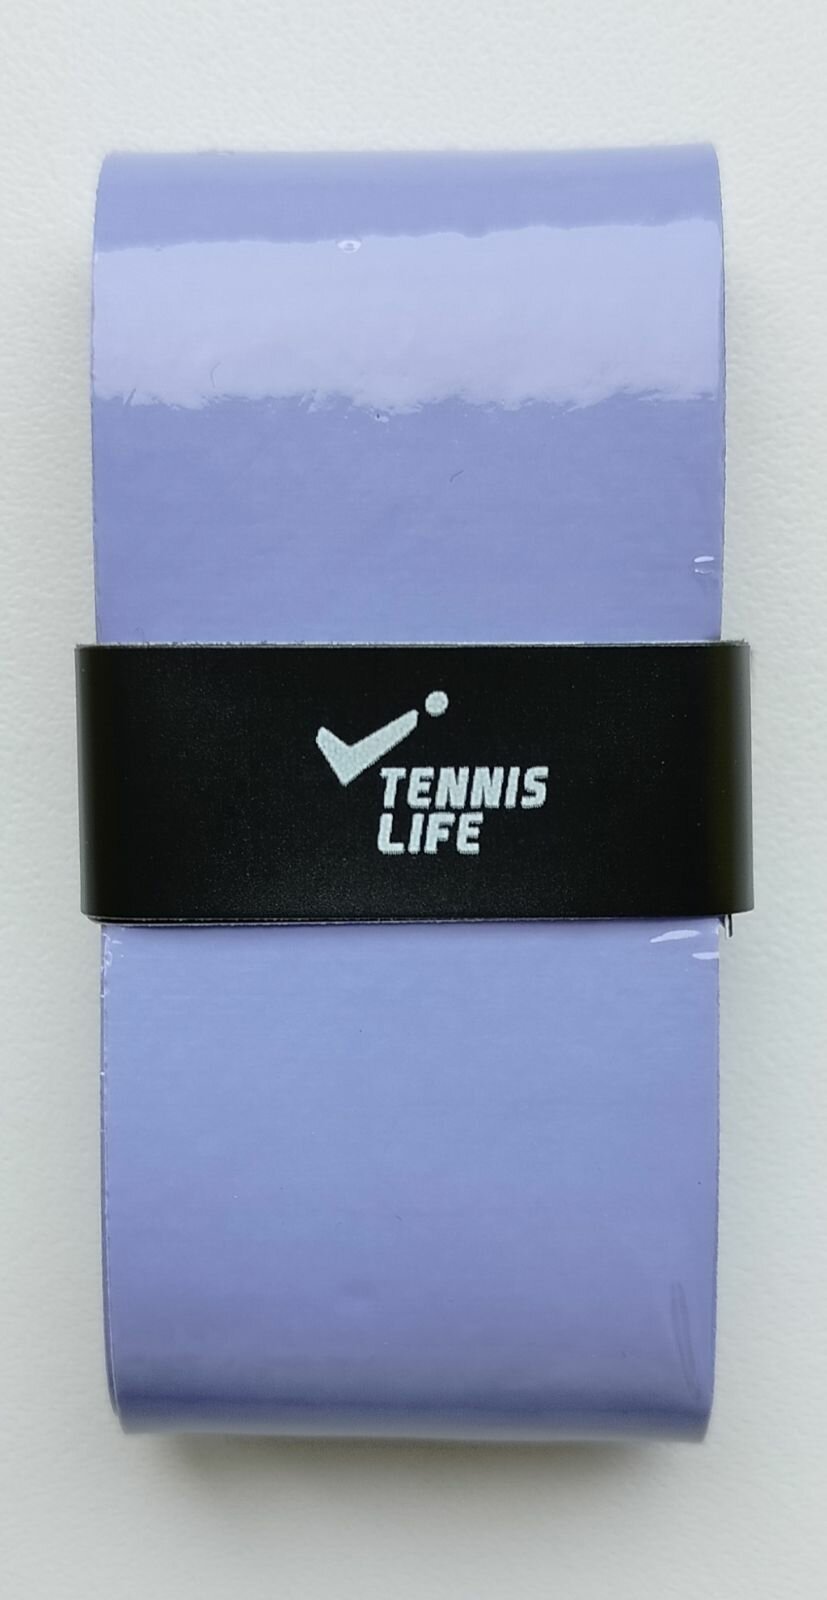 "Tennis Life TAC" - намотки для ракеток, 3 шт в наборе, липкие